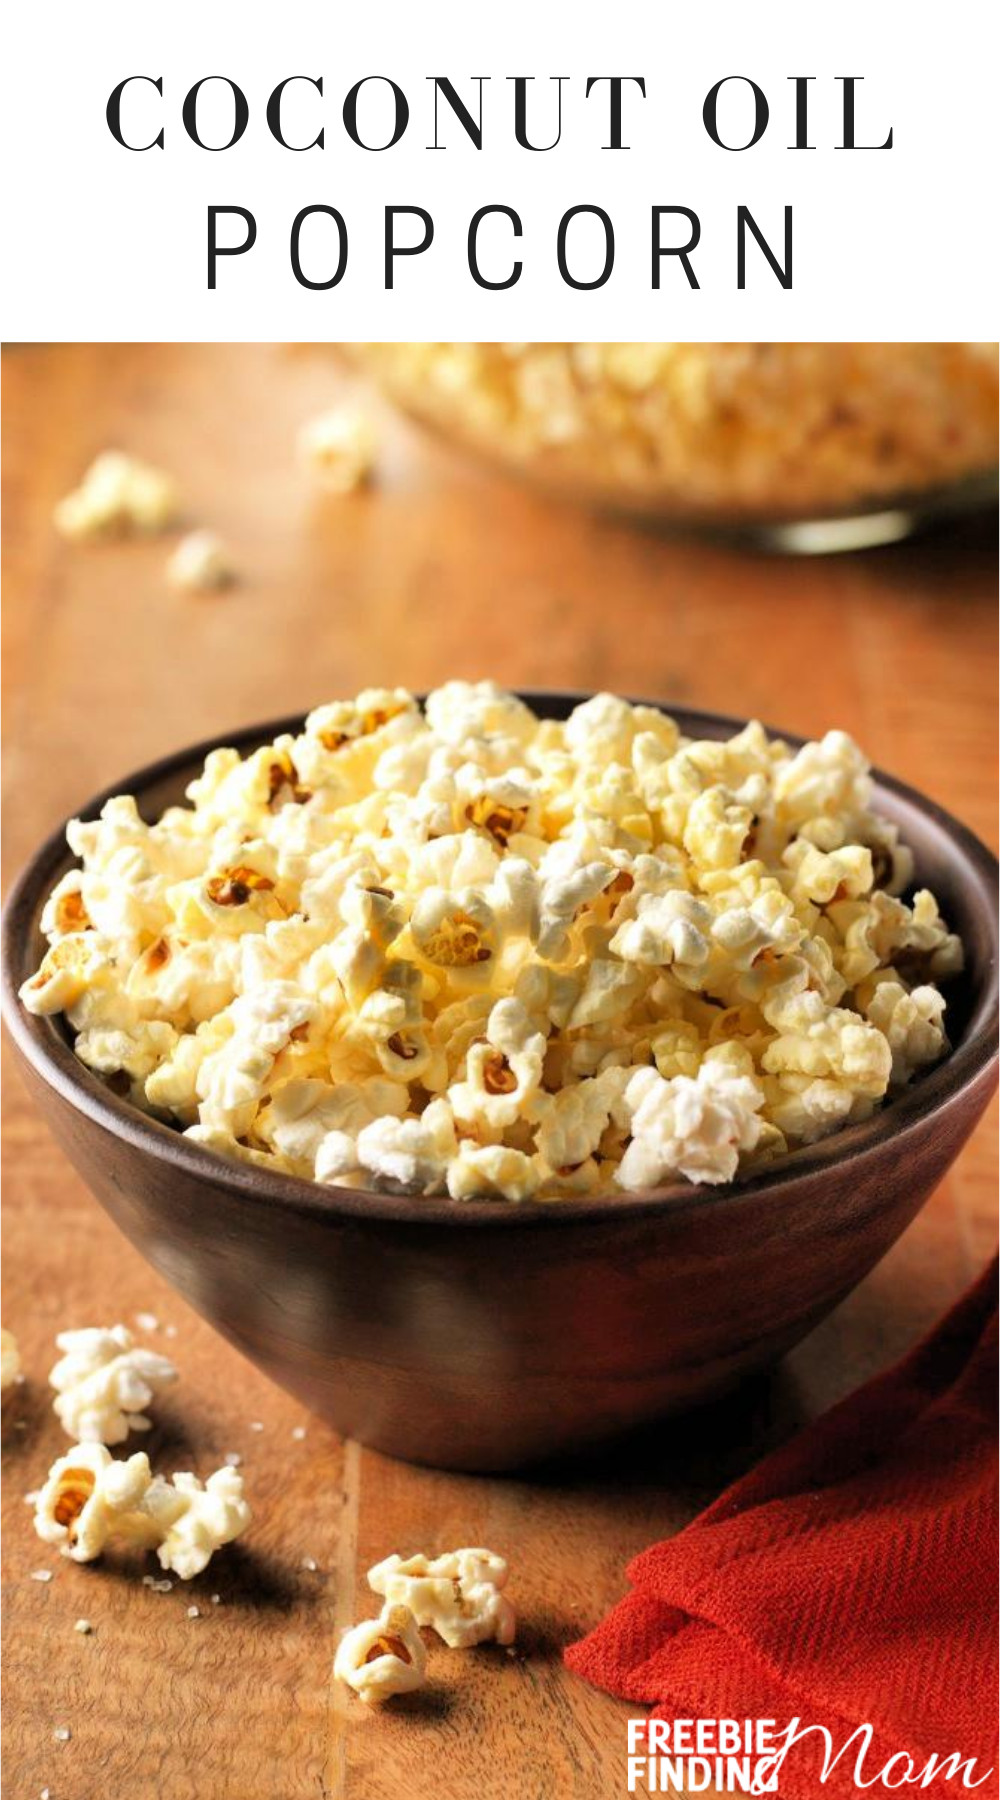 Low Calorie Popcorn Recipes
 Low Calorie Popcorn 4 Minute Recipe Freebie Finding